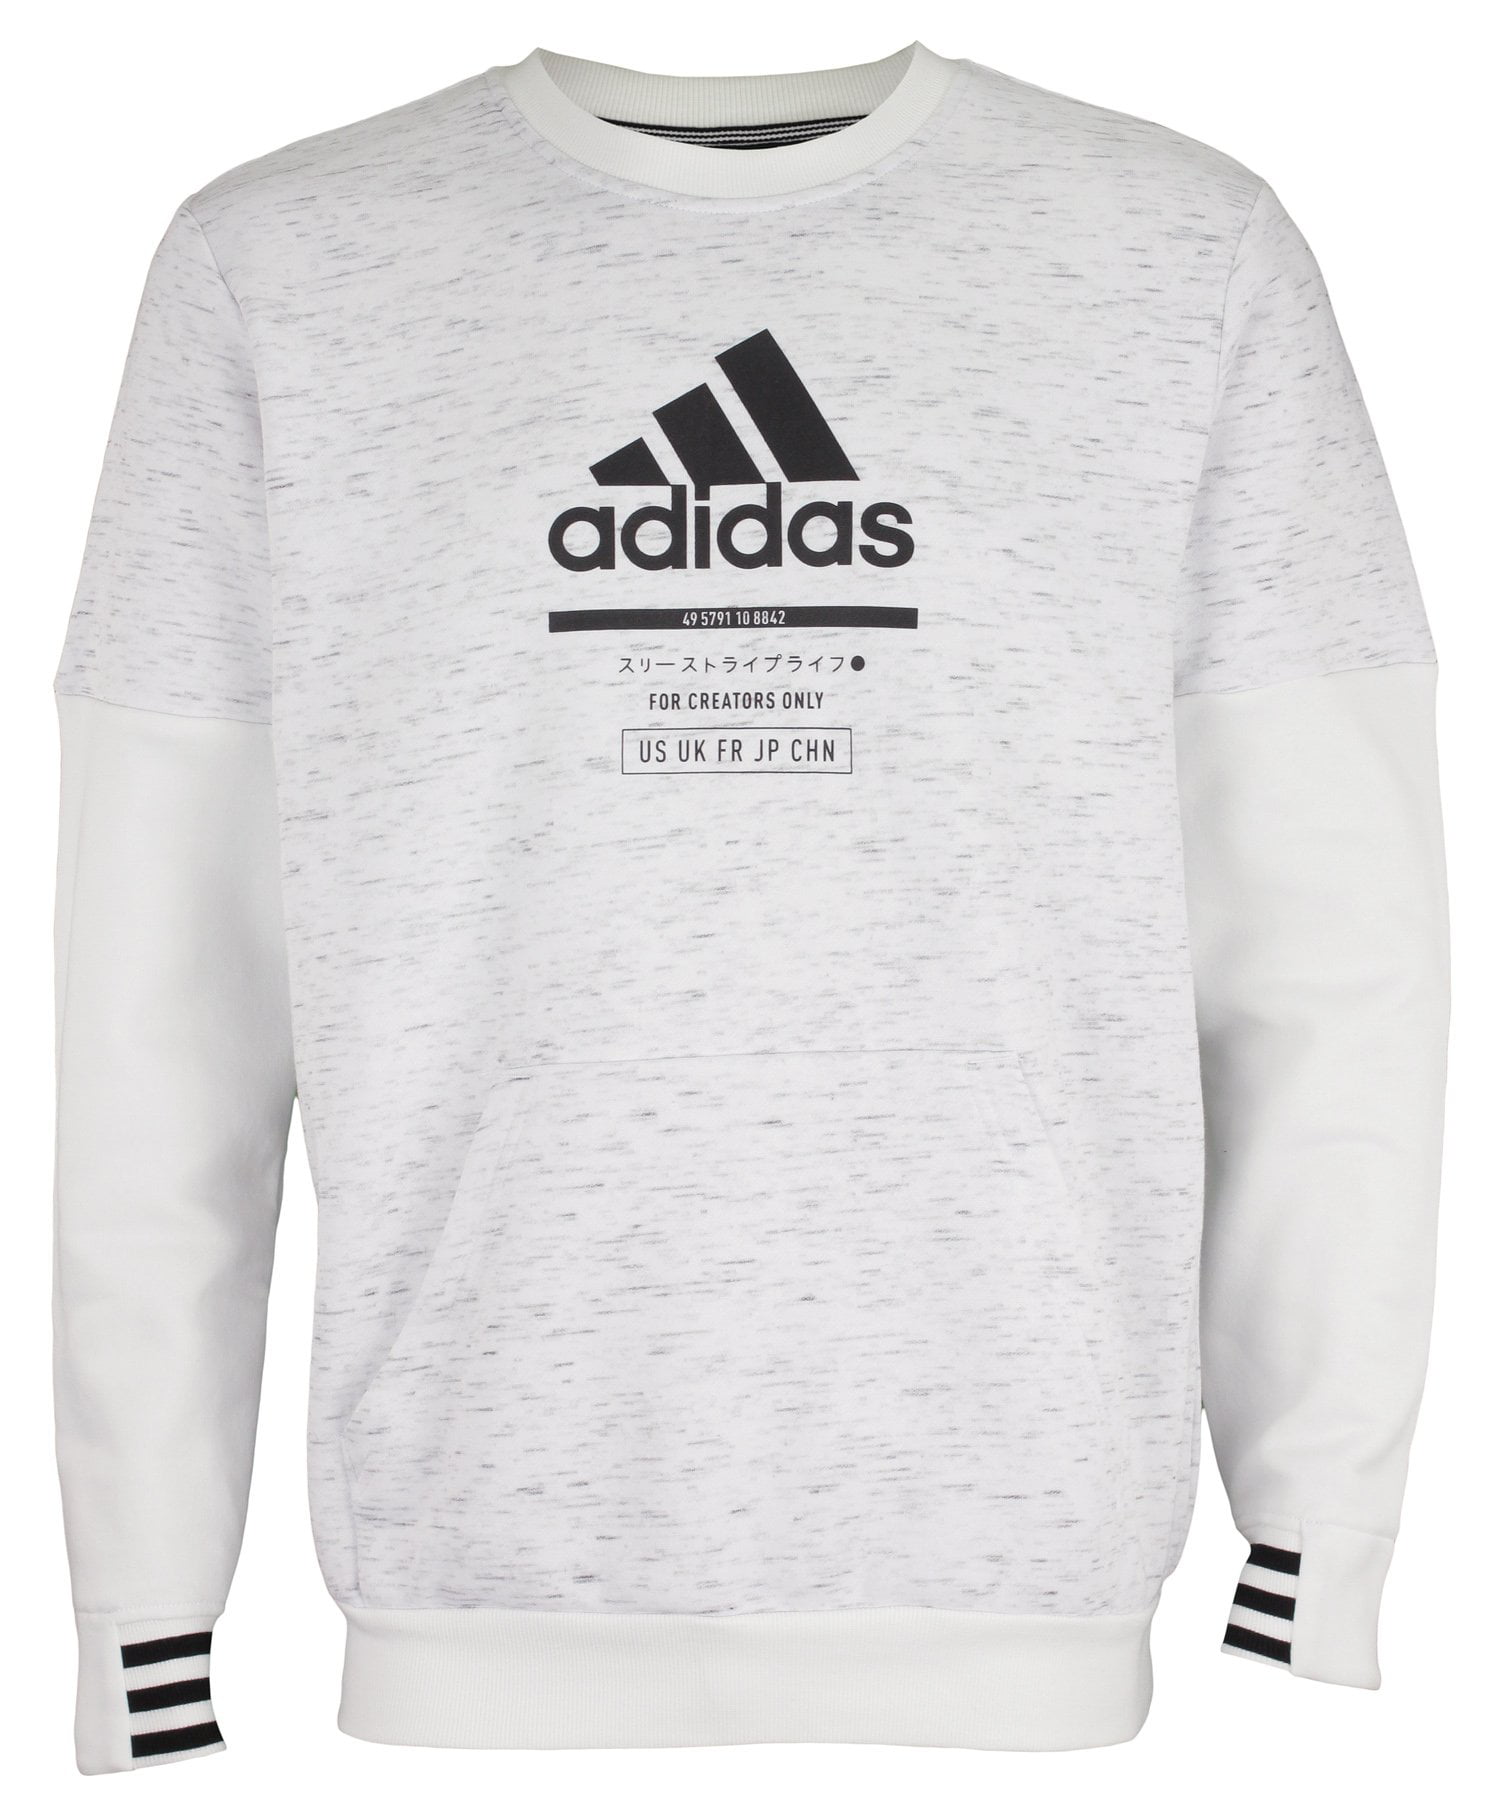 adidas for creators only sweatshirt